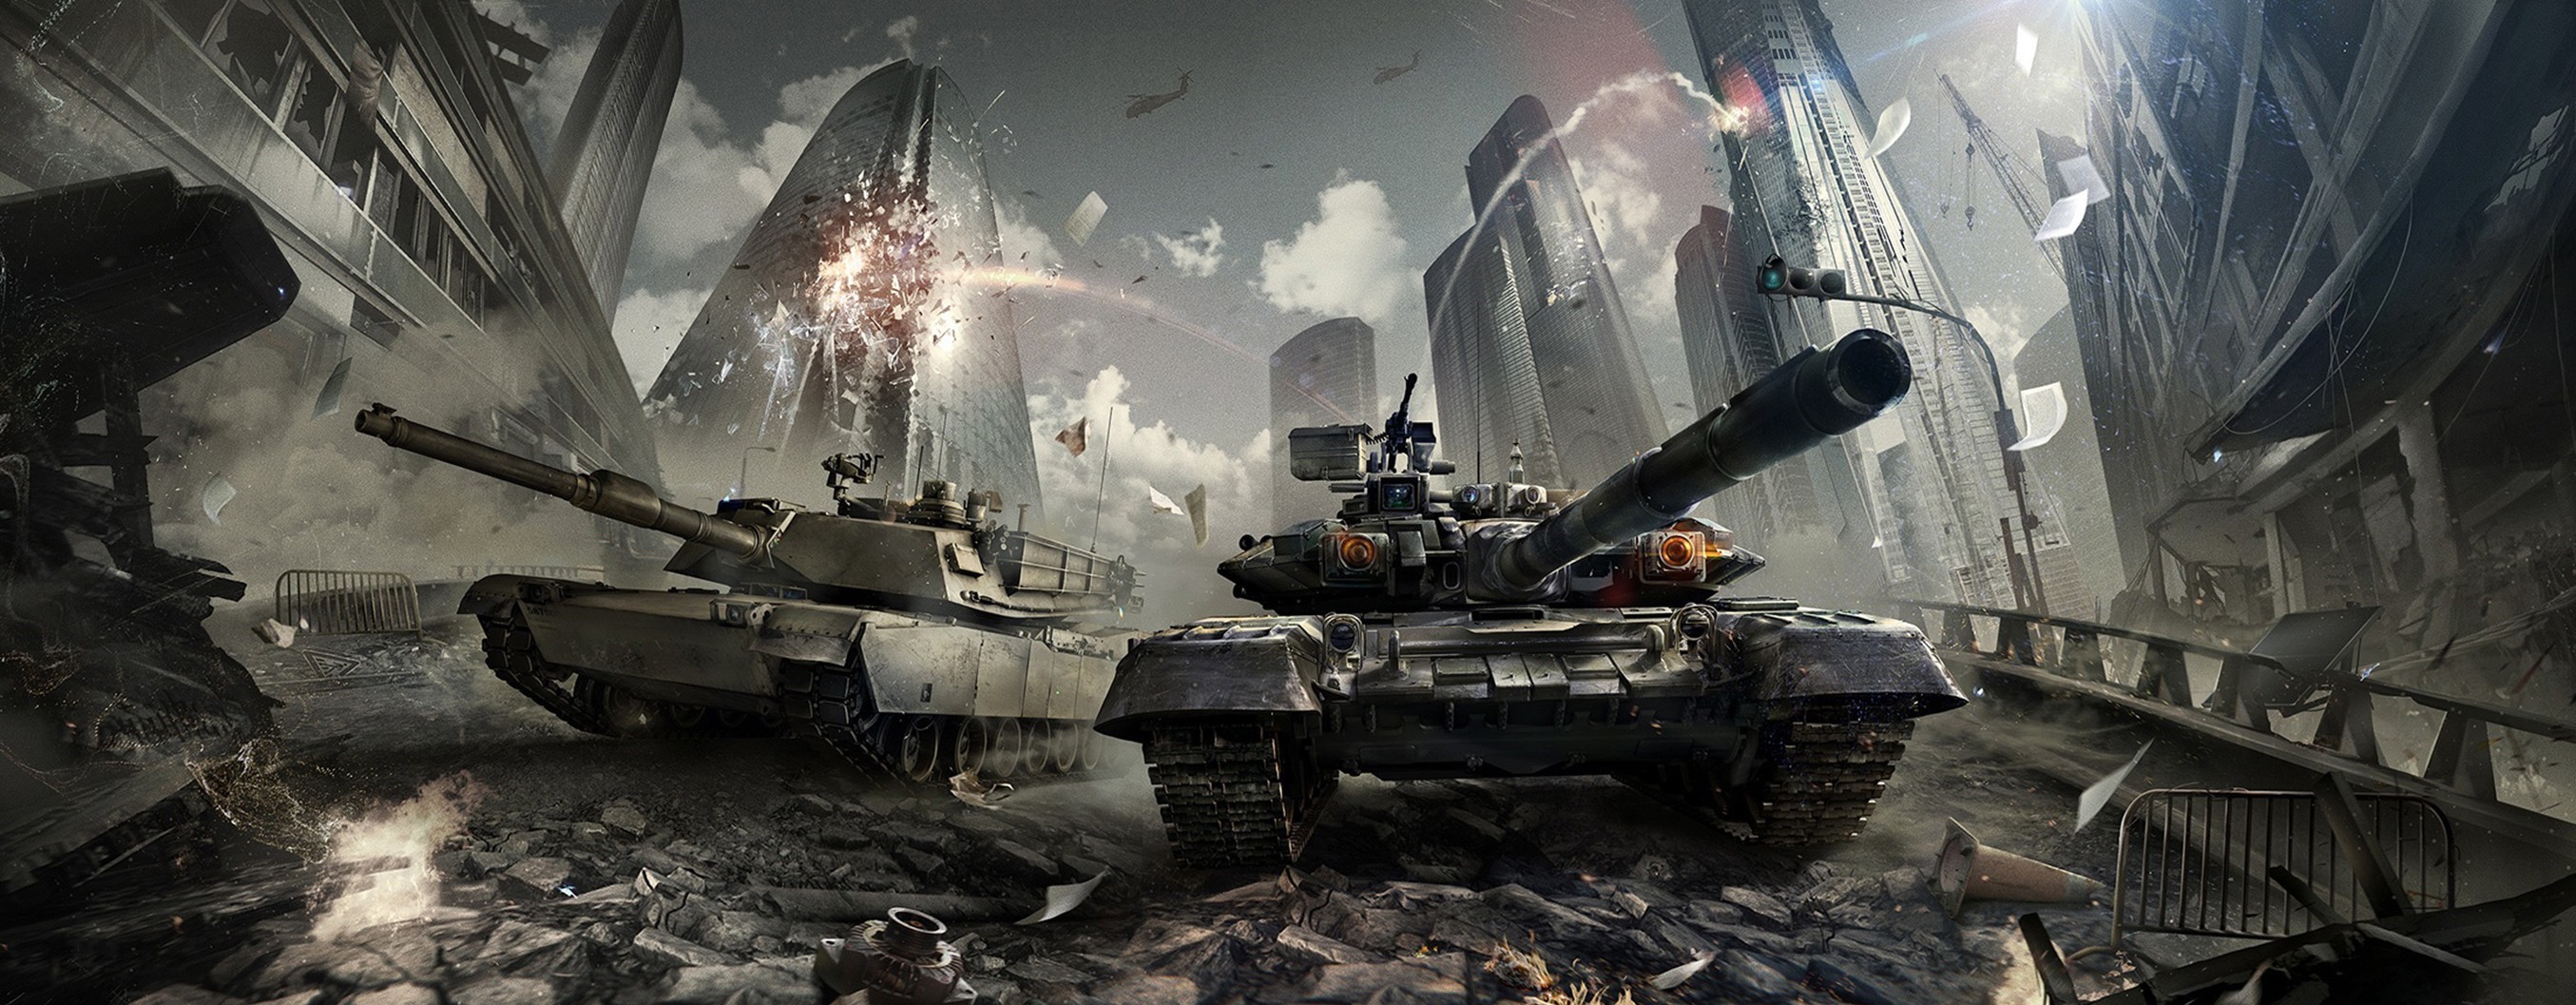 General 2710x1057 war artwork tank military vehicle vehicle city ruins digital art T-90 M1 Abrams